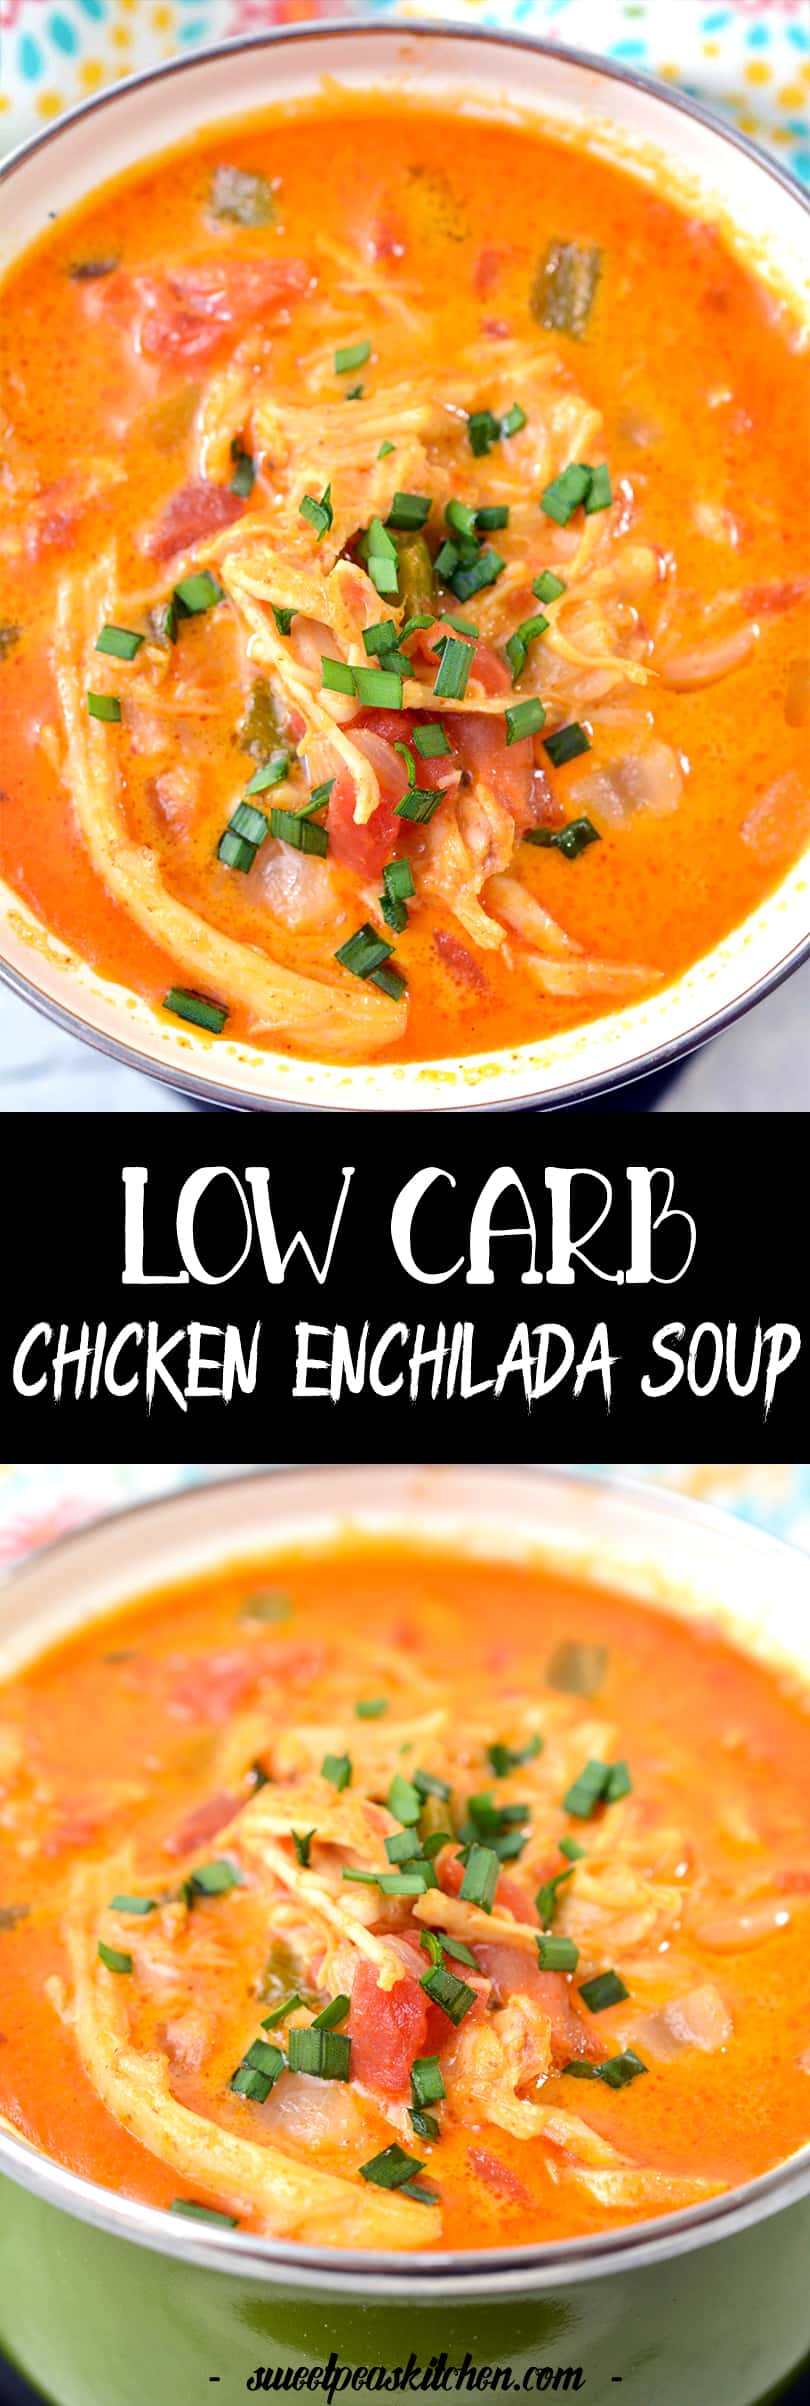 Low Carb Chicken Enchilada Soup